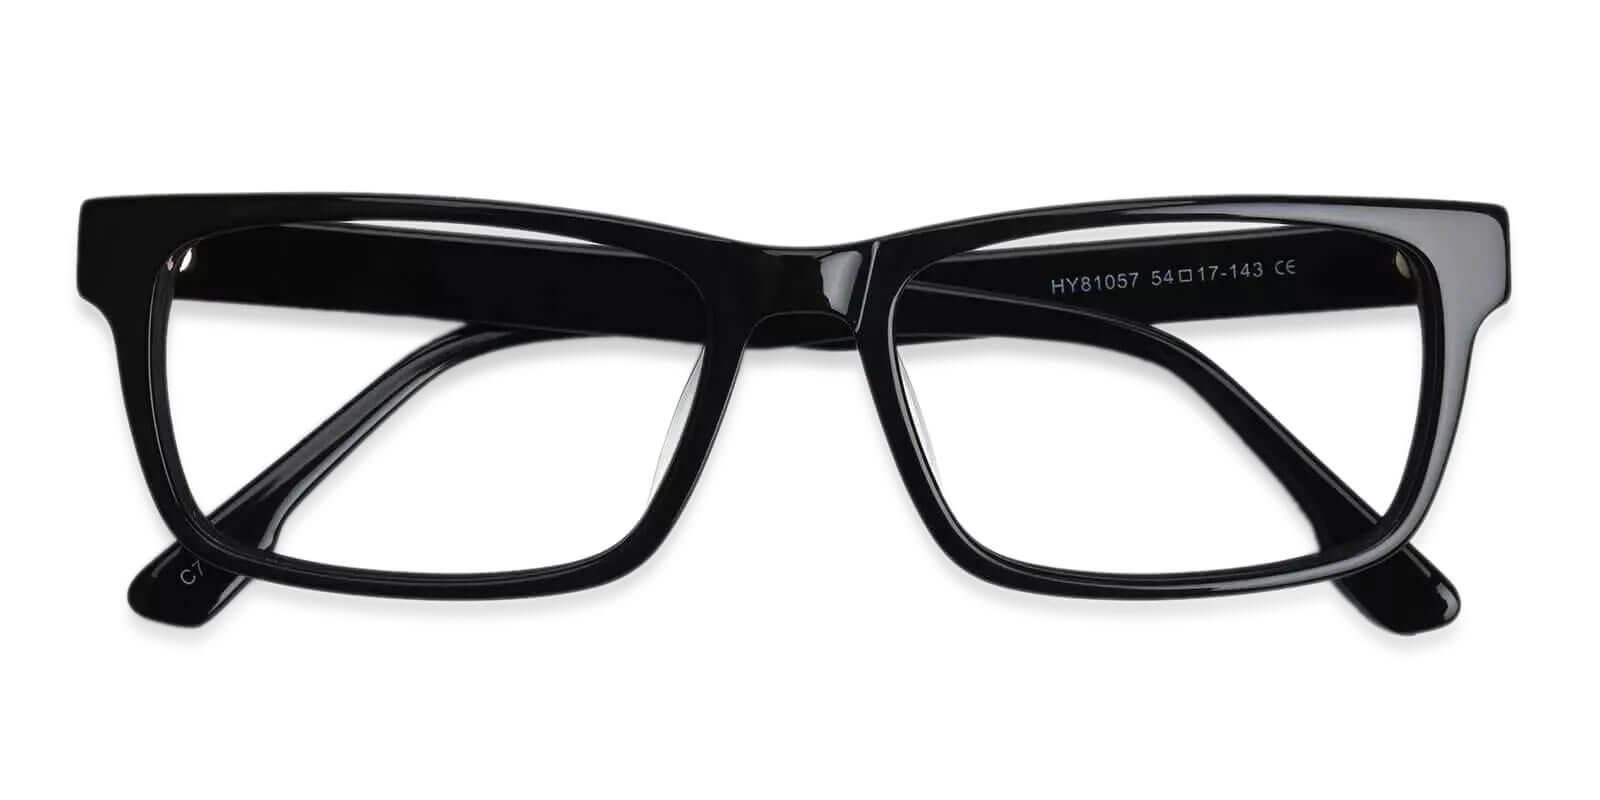 Mineral Wells Black Acetate Eyeglasses , UniversalBridgeFit Frames from ABBE Glasses